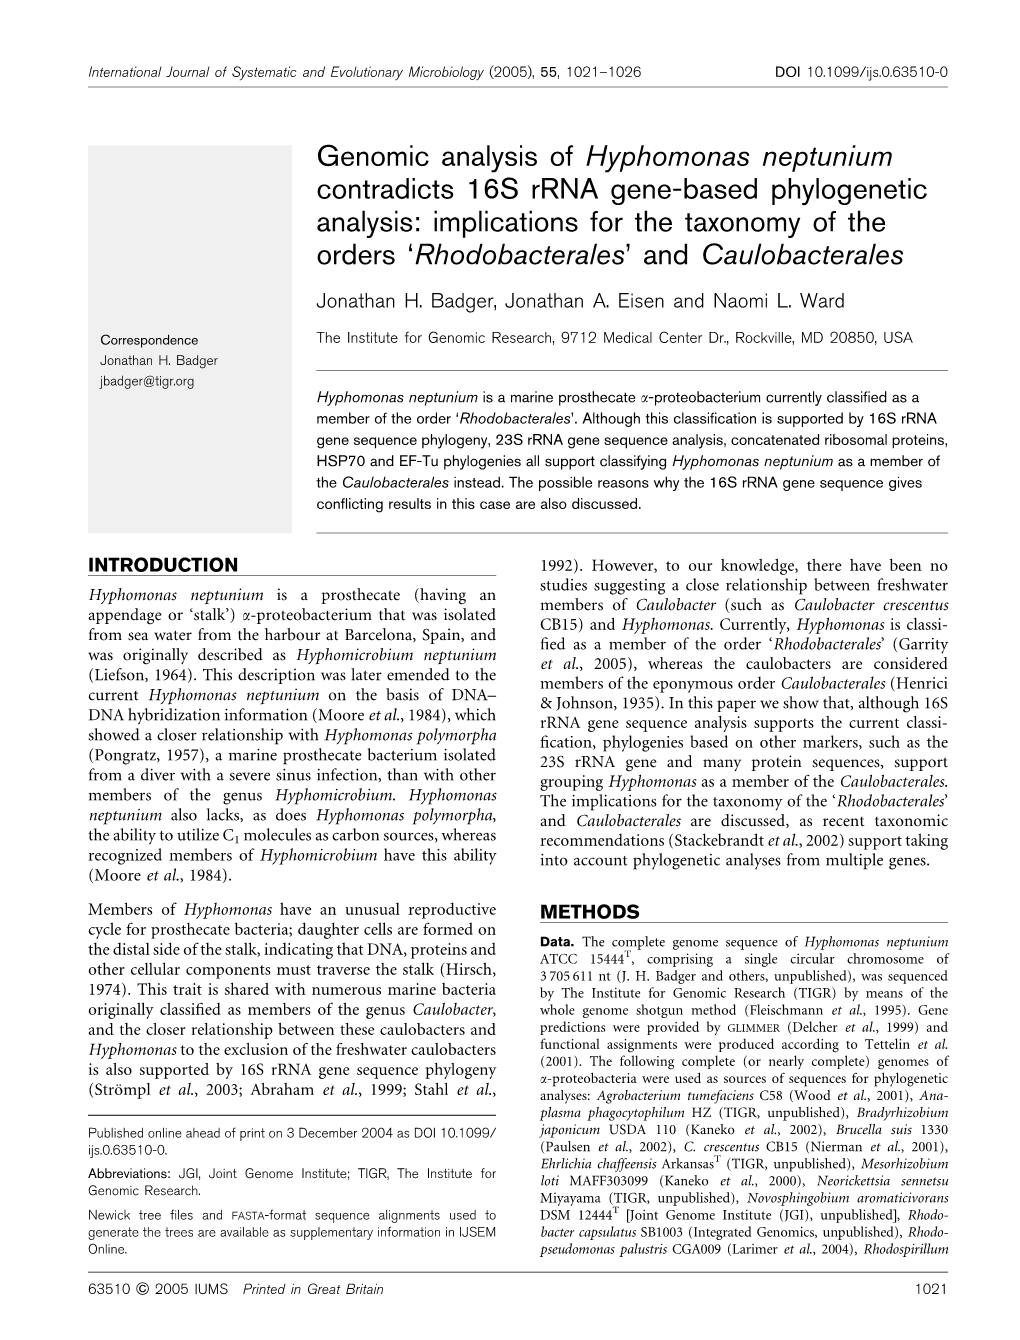 Genomic Analysis of Hyphomonas Neptunium